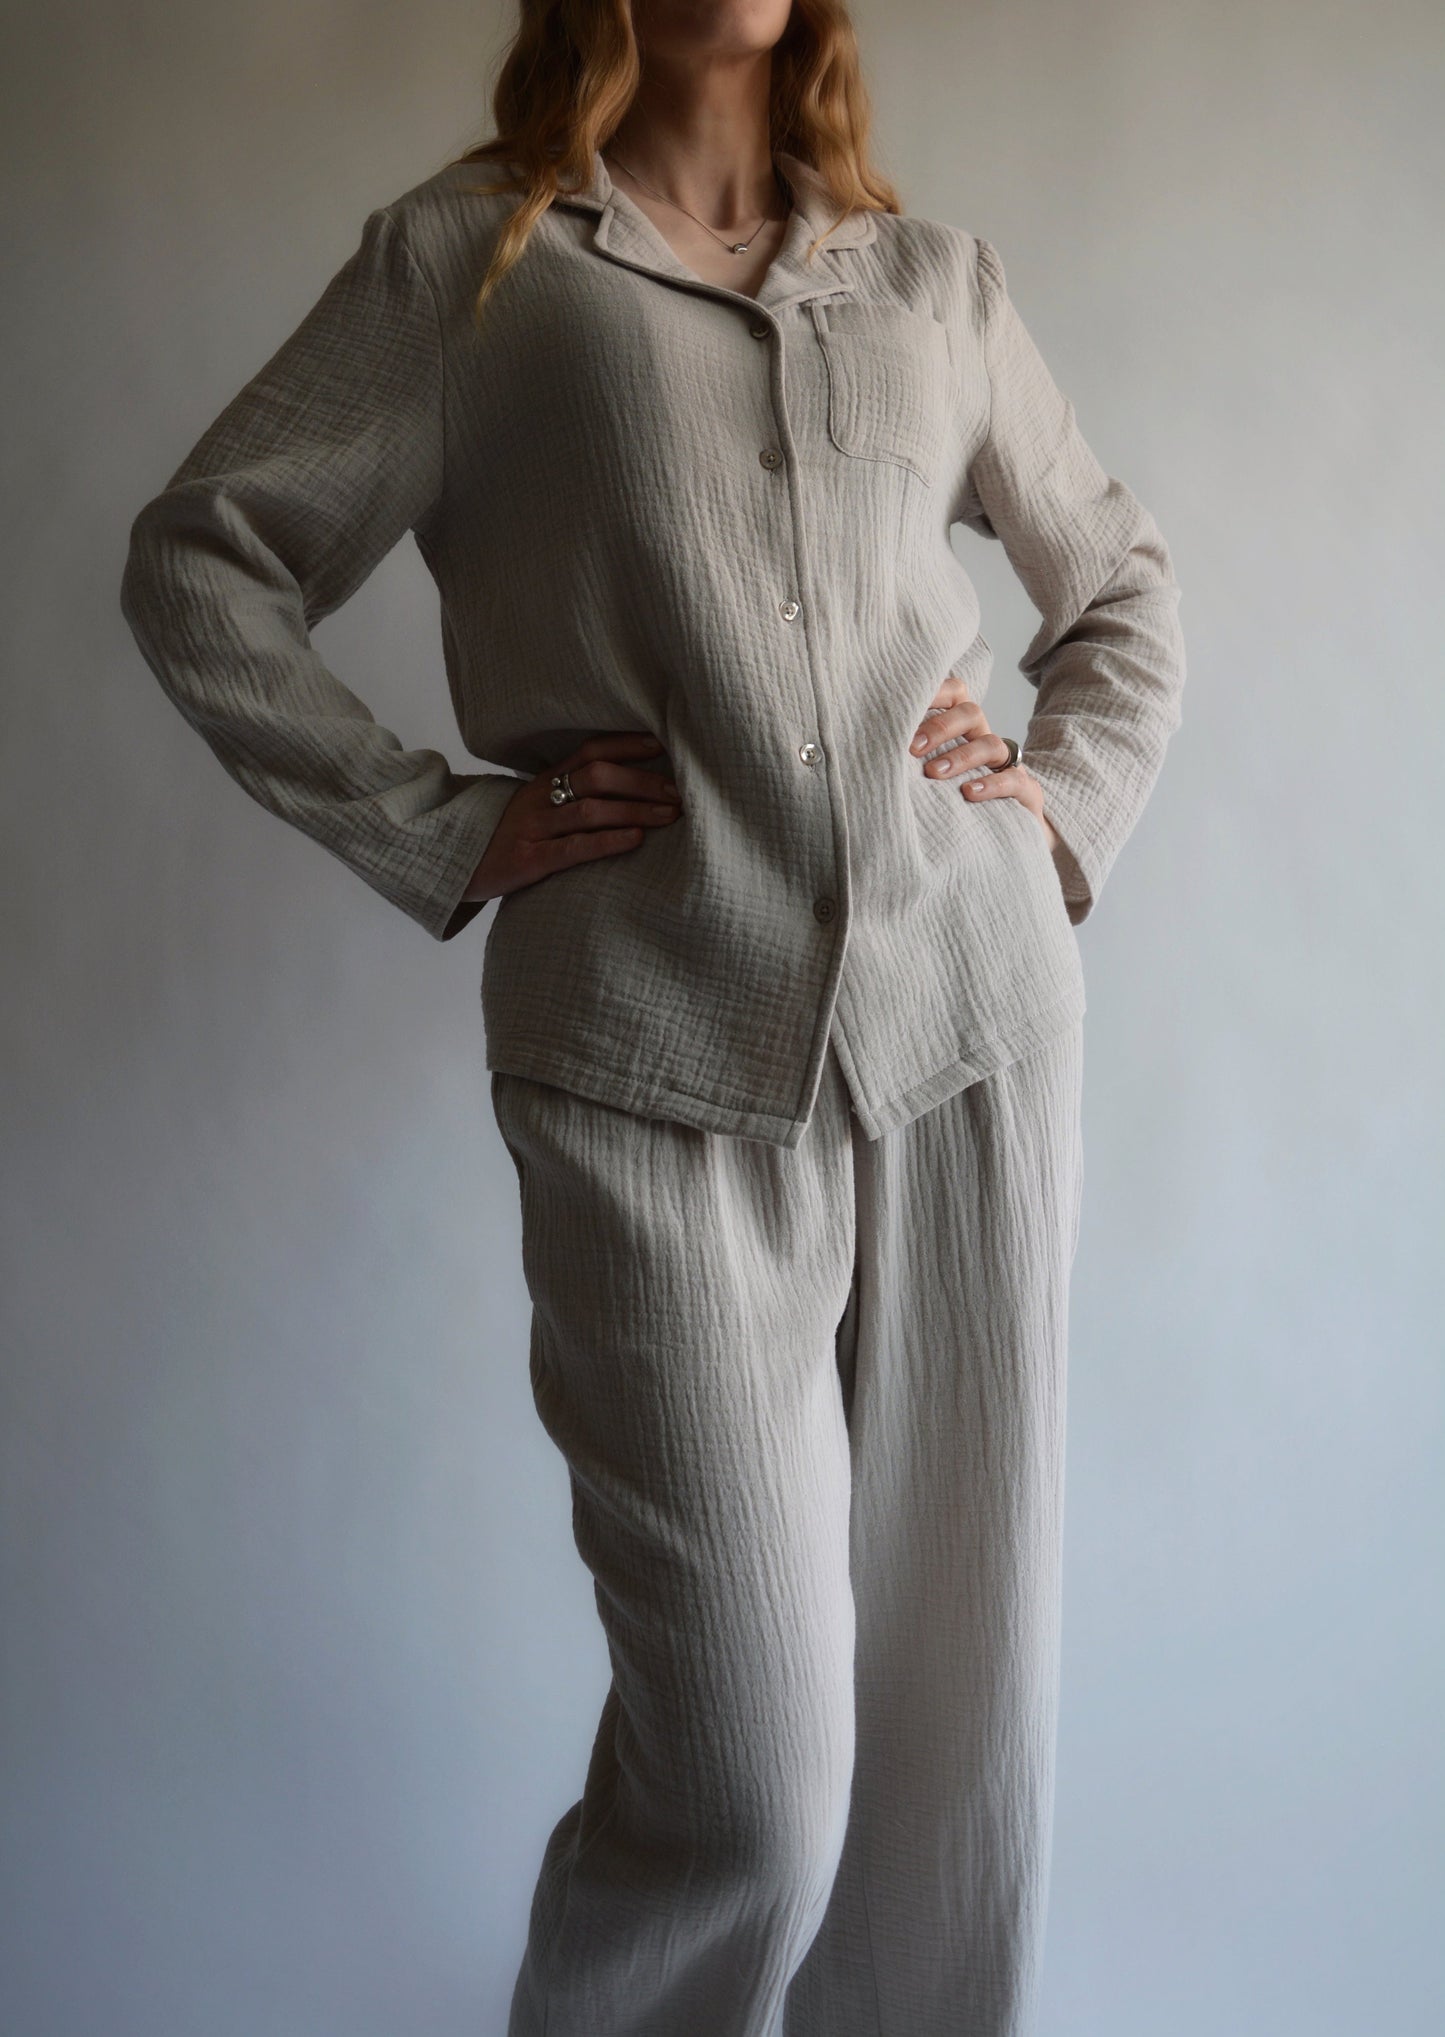 Cotton Muslin double gauze Sleepwear Set pajama set in beige color